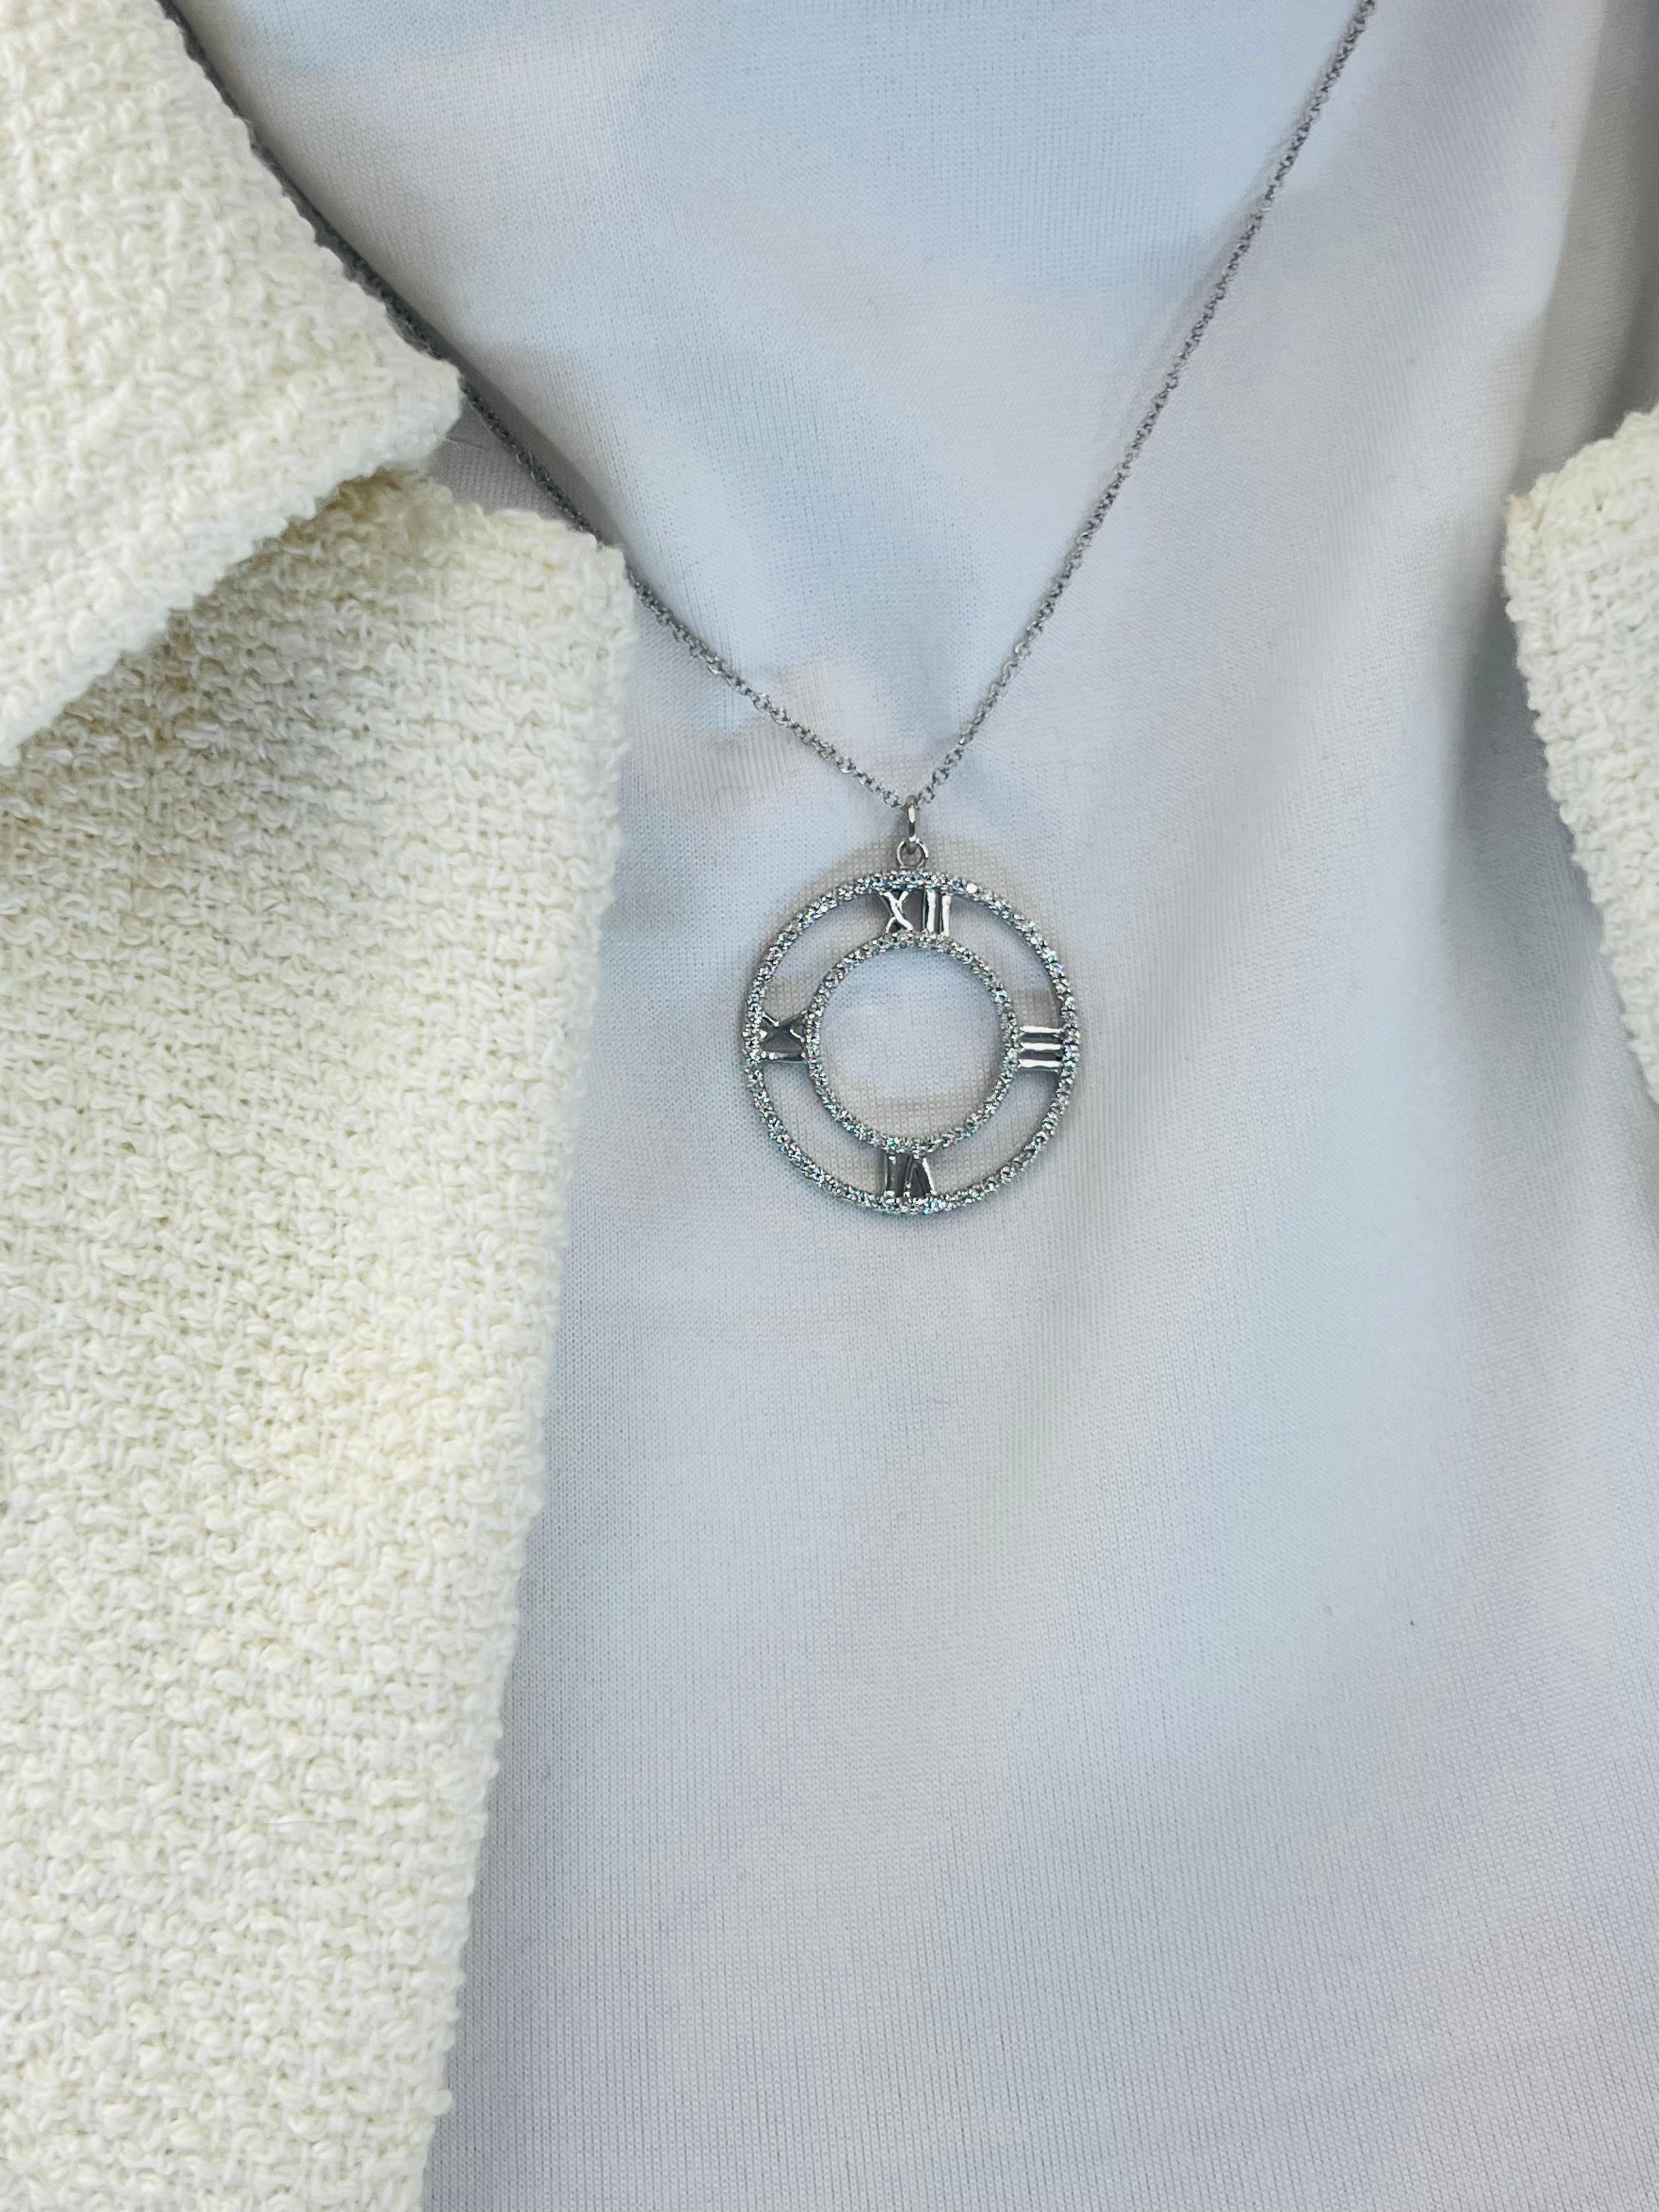 Tiffany & Co. Atlas Diamond Open Medallion Pendant Necklace 18K White Gold Large In Excellent Condition For Sale In MIAMI, FL